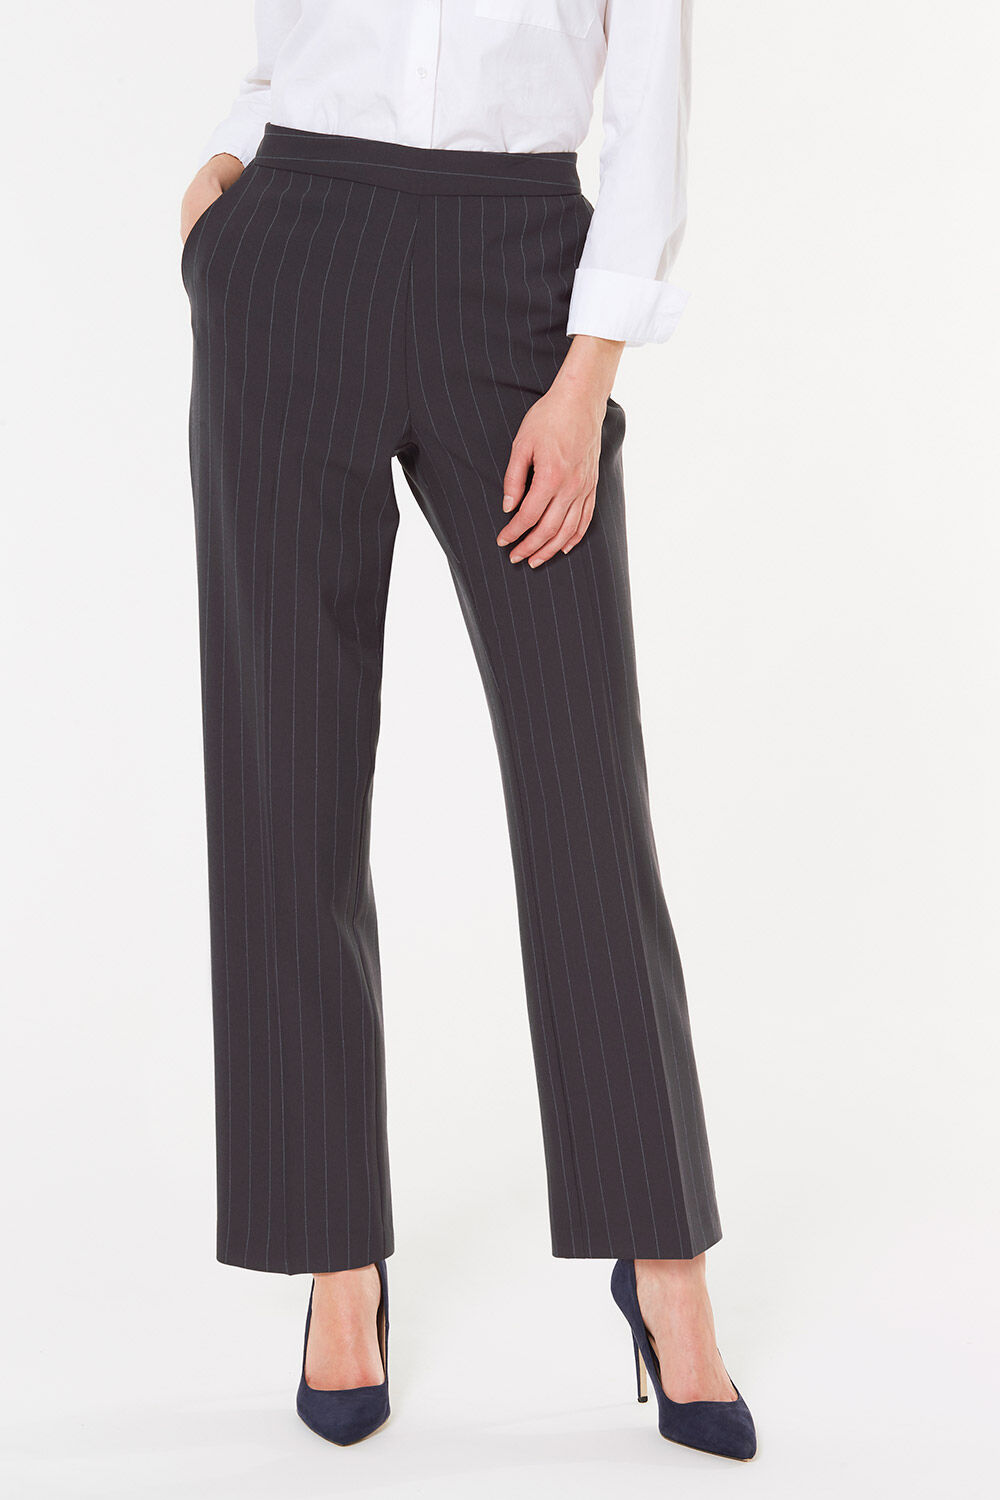 Bonmarche Straight Leg Stripe Pull On Trouser - Navy, Size: 16